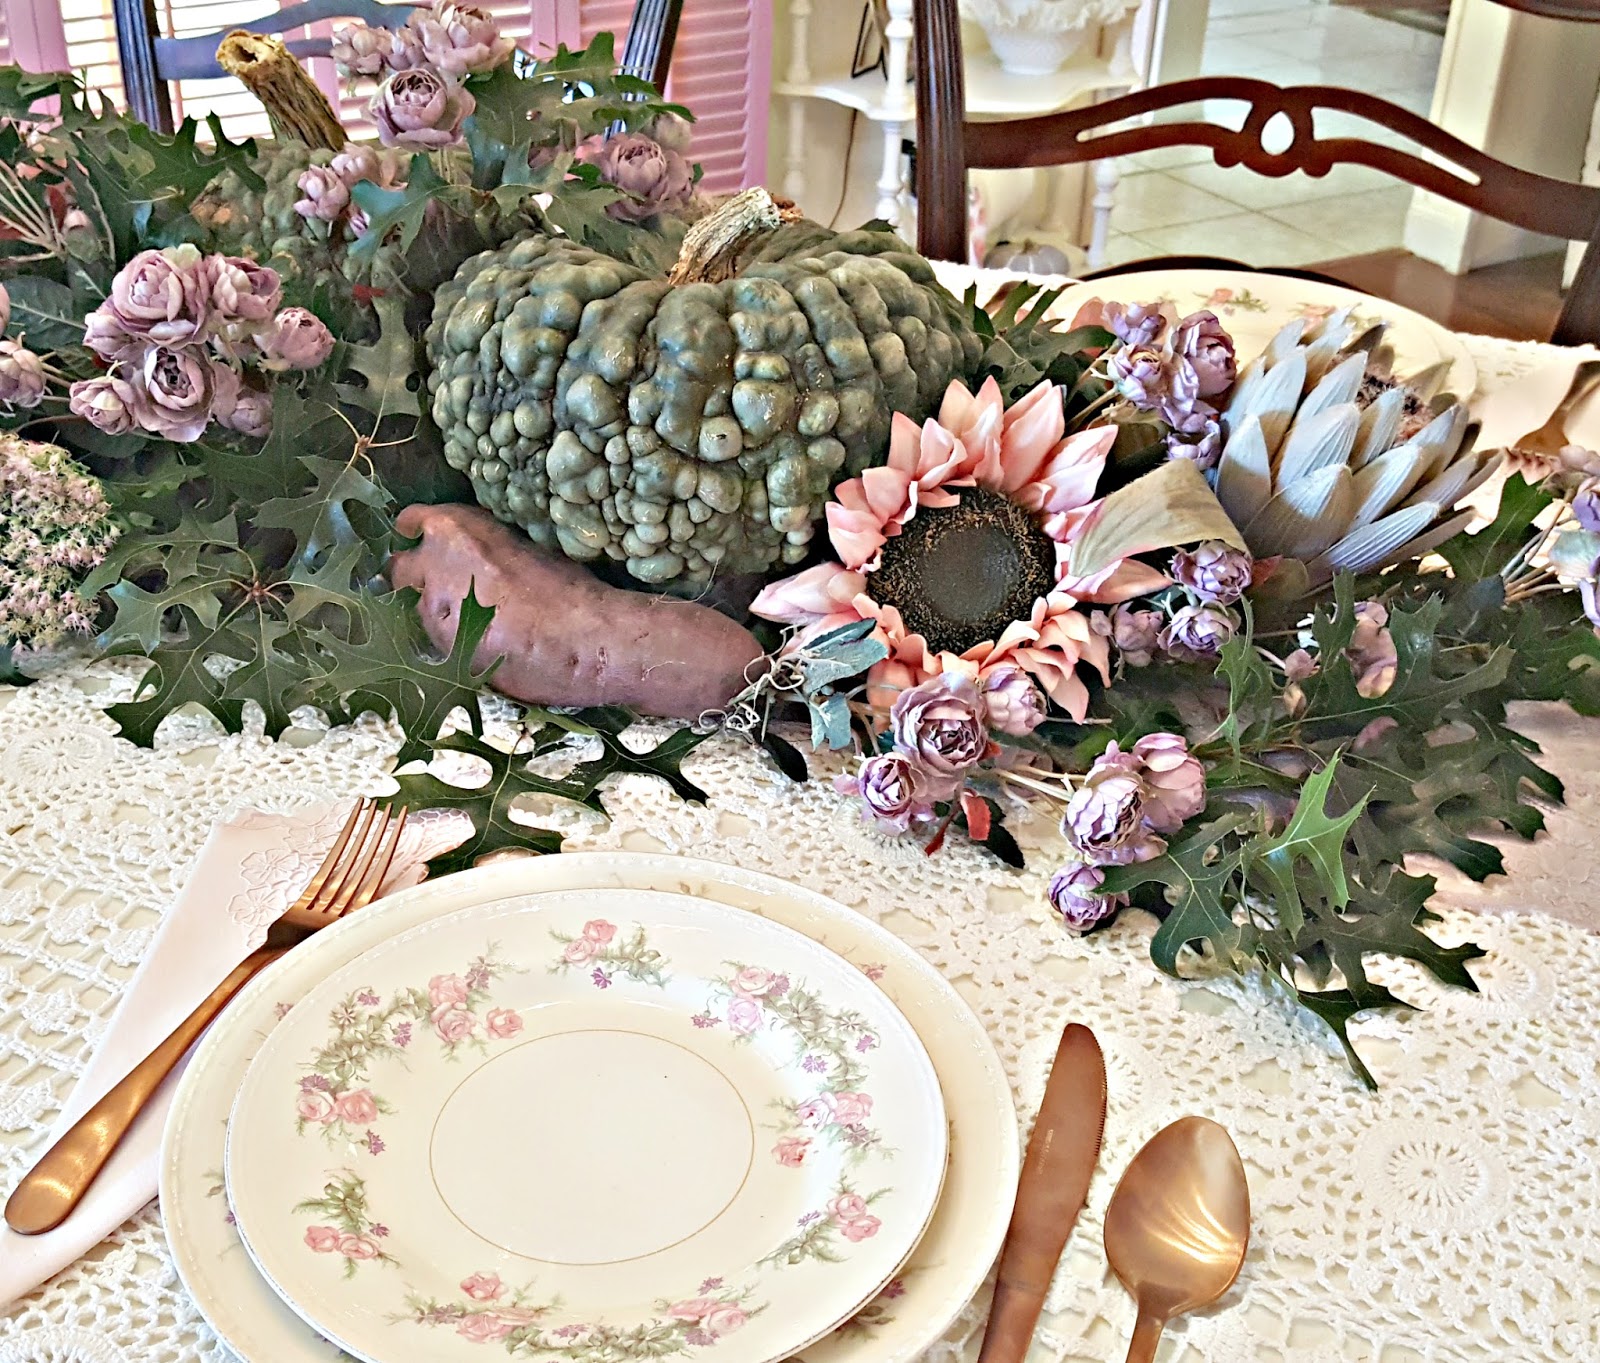 Penny's Vintage Home: Lavender Tablescape and Purple Sweet Potato's